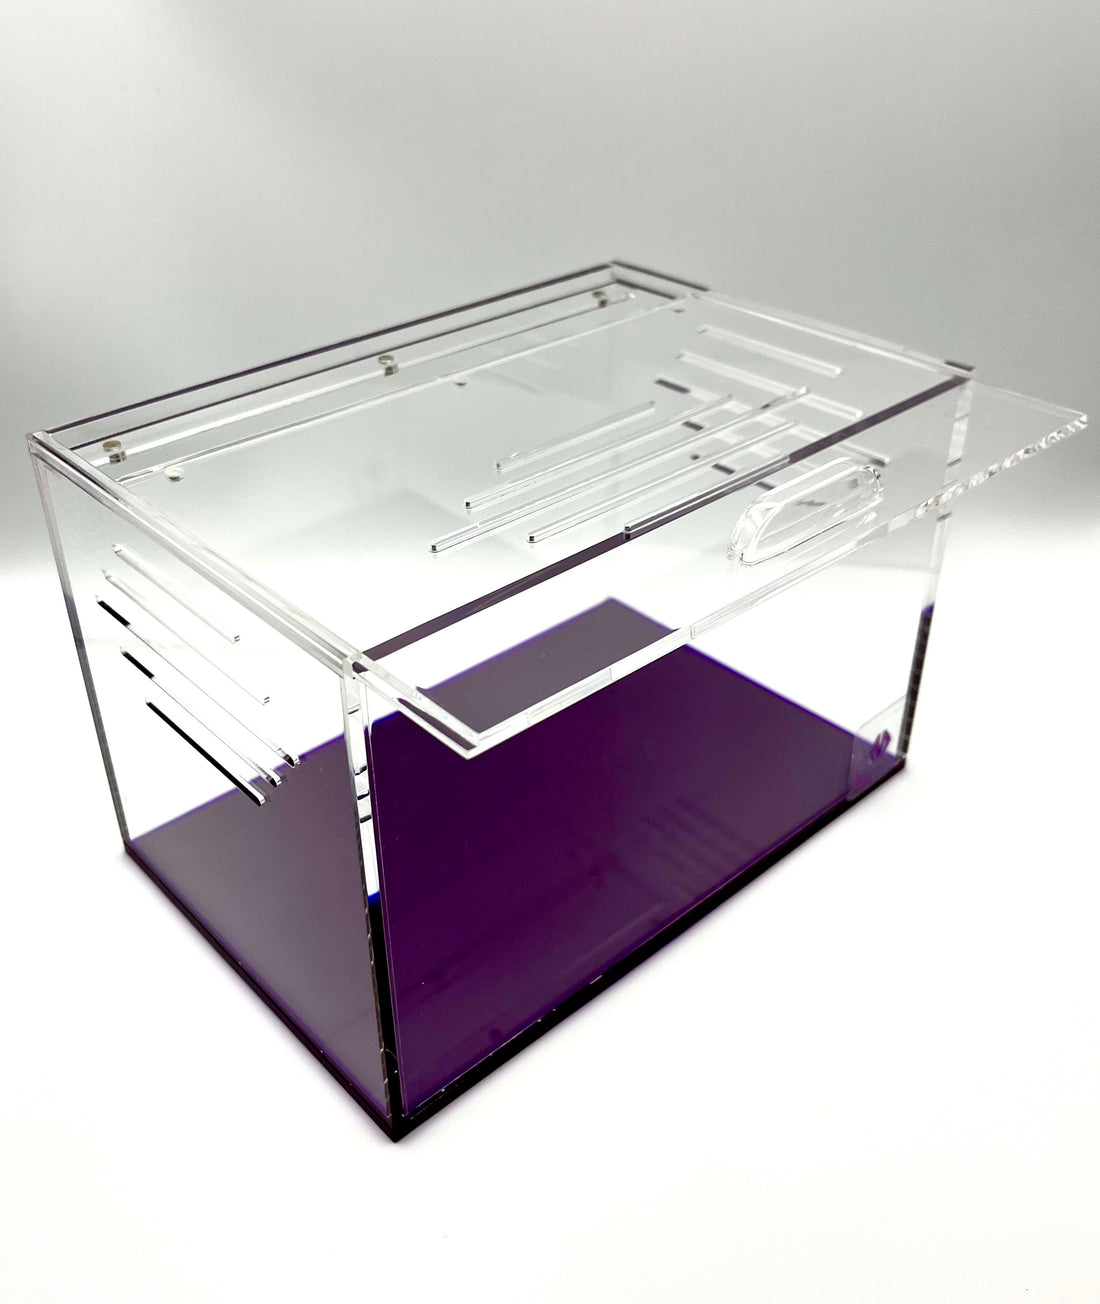 news 13 Mar 2023 - Tinley incoming + new purplebox!